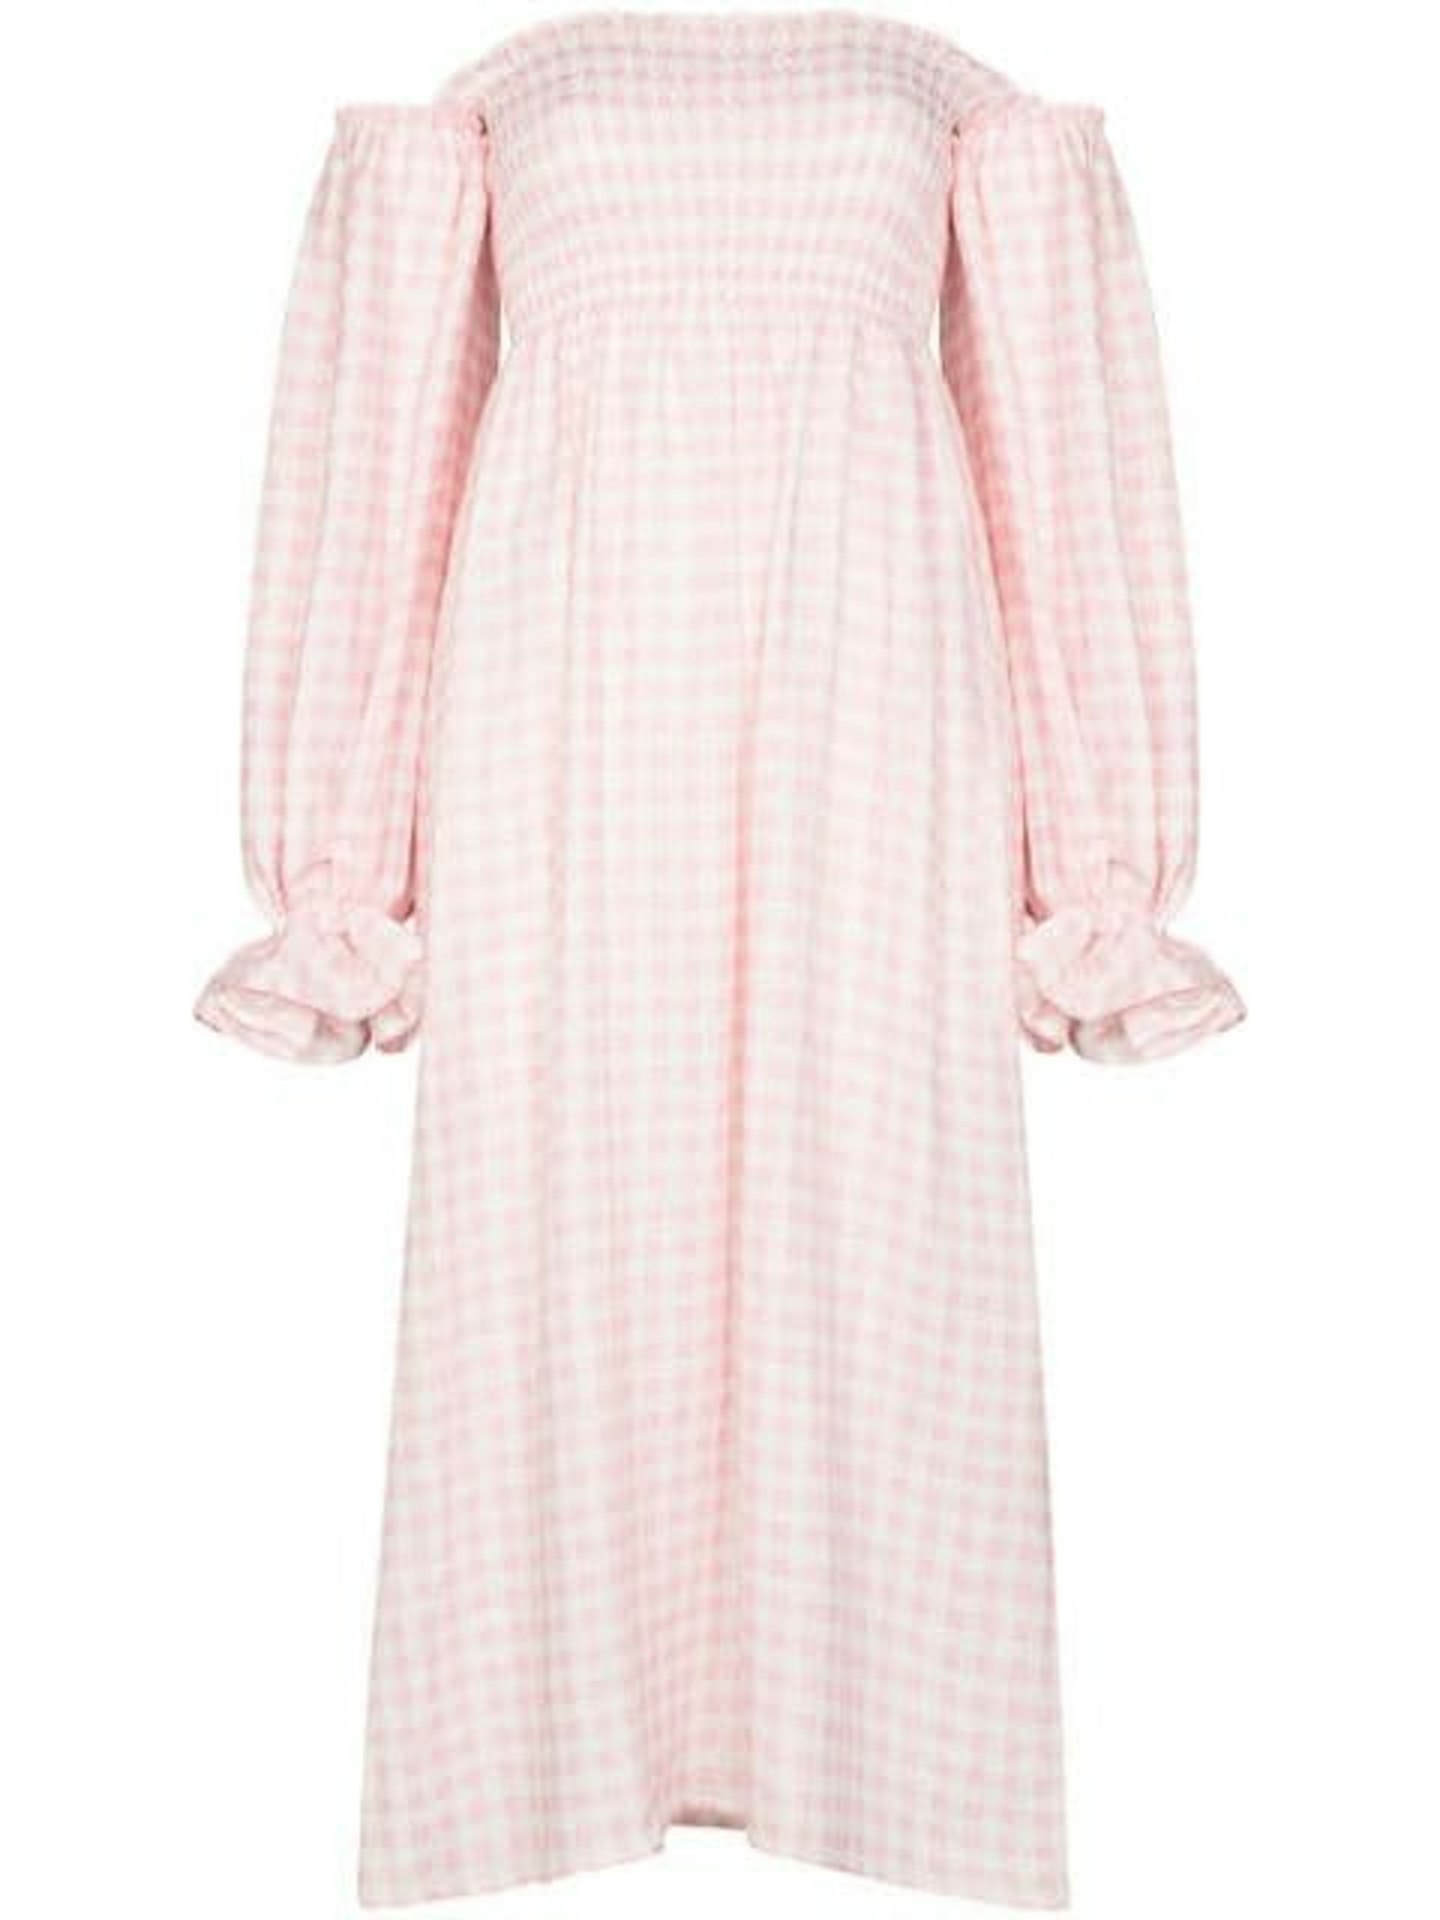 Sleeper, Gingham Dress, £285